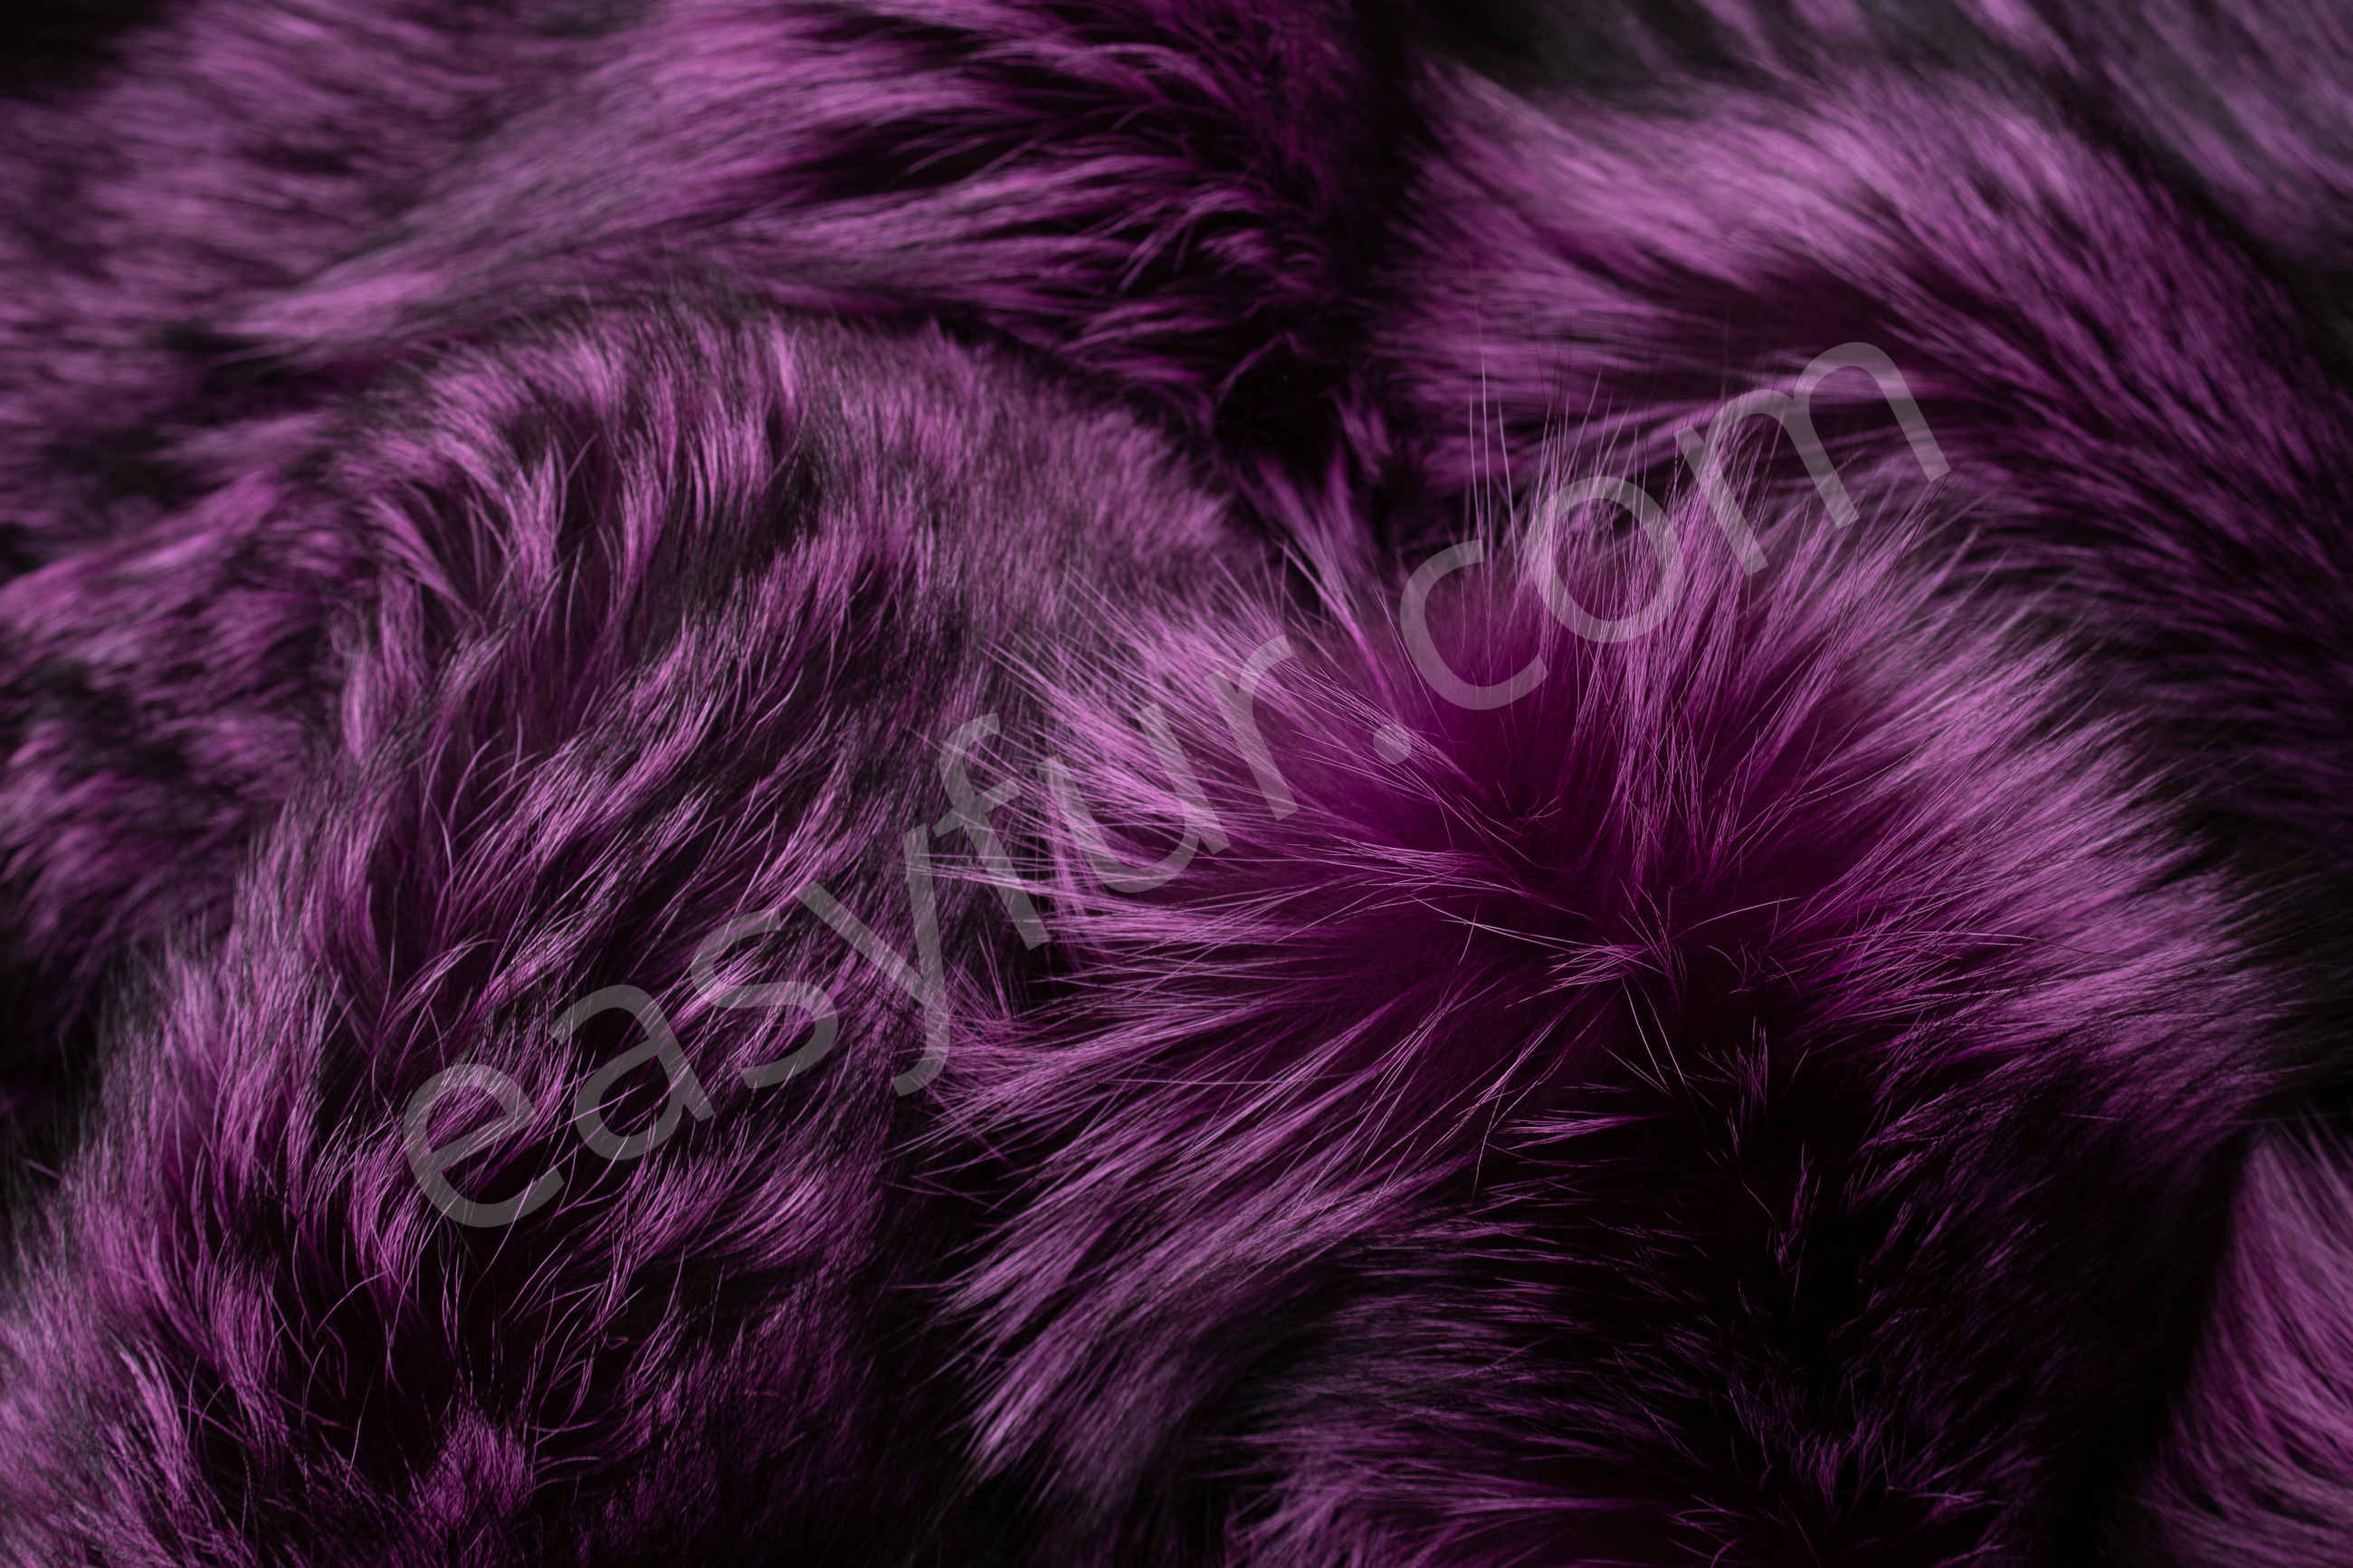 Silver Fox Skins in violet